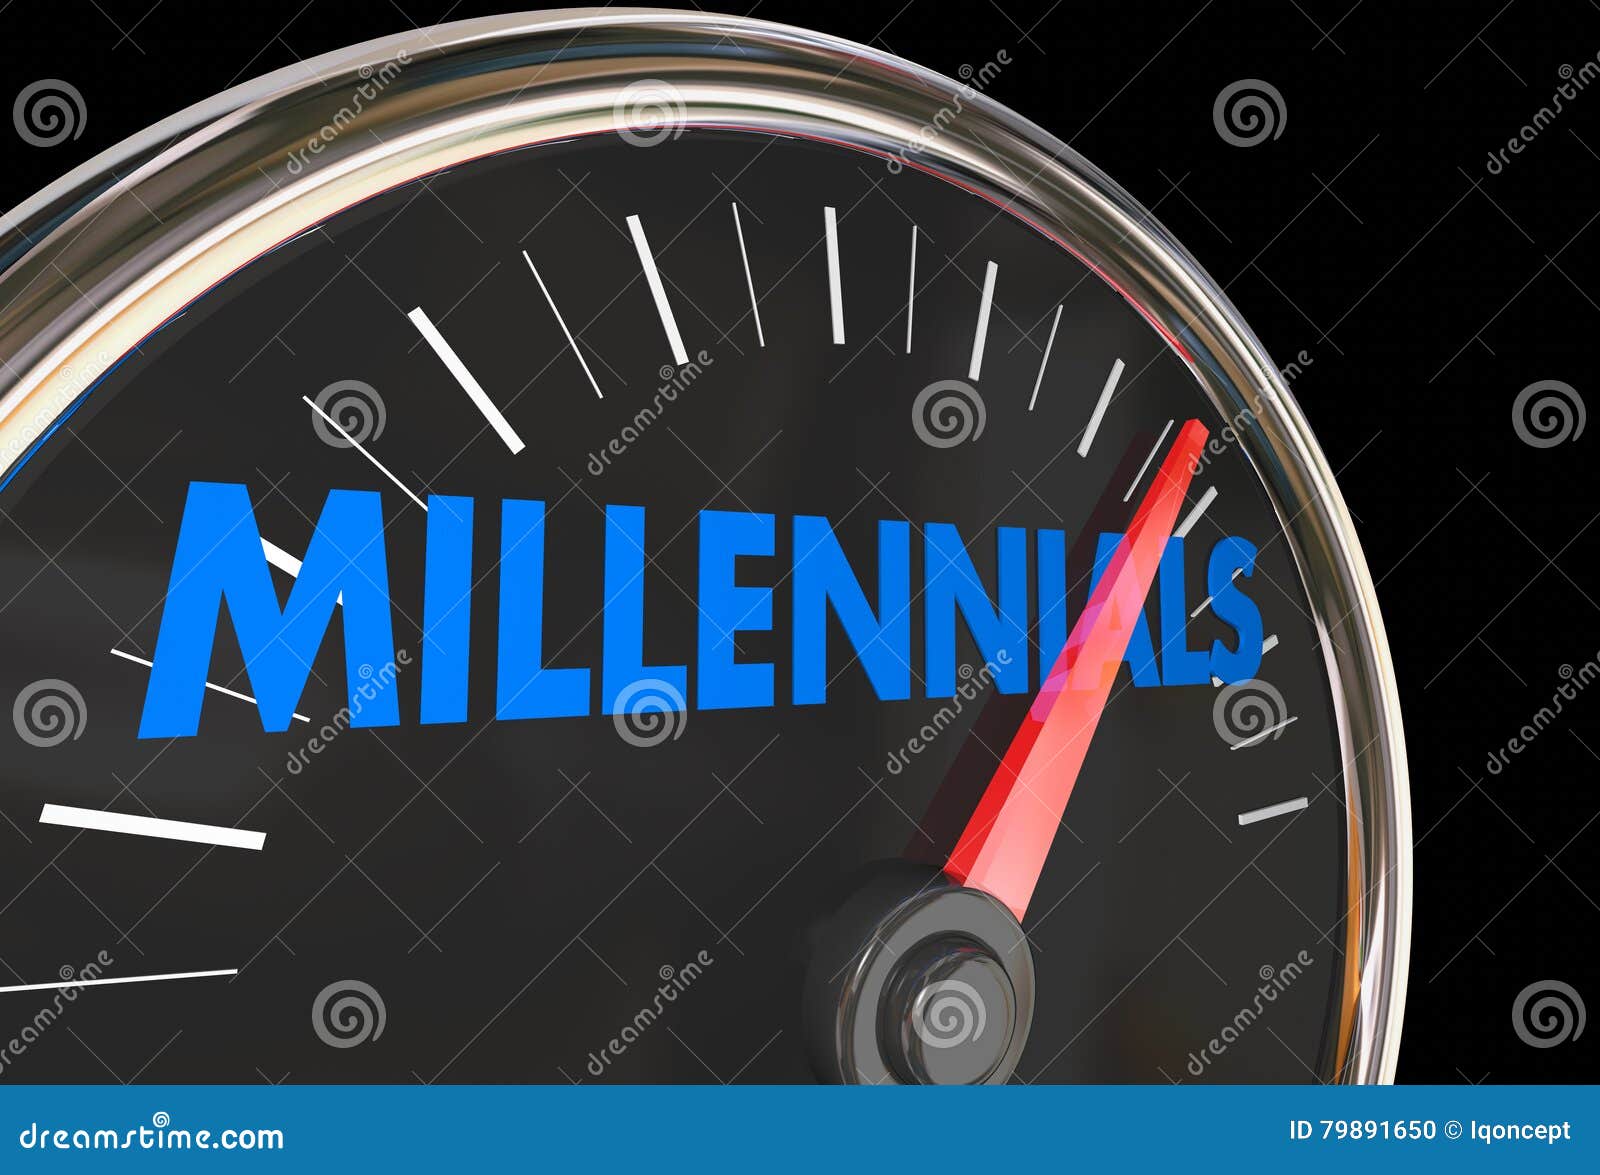 millennials speedometer young demographic group